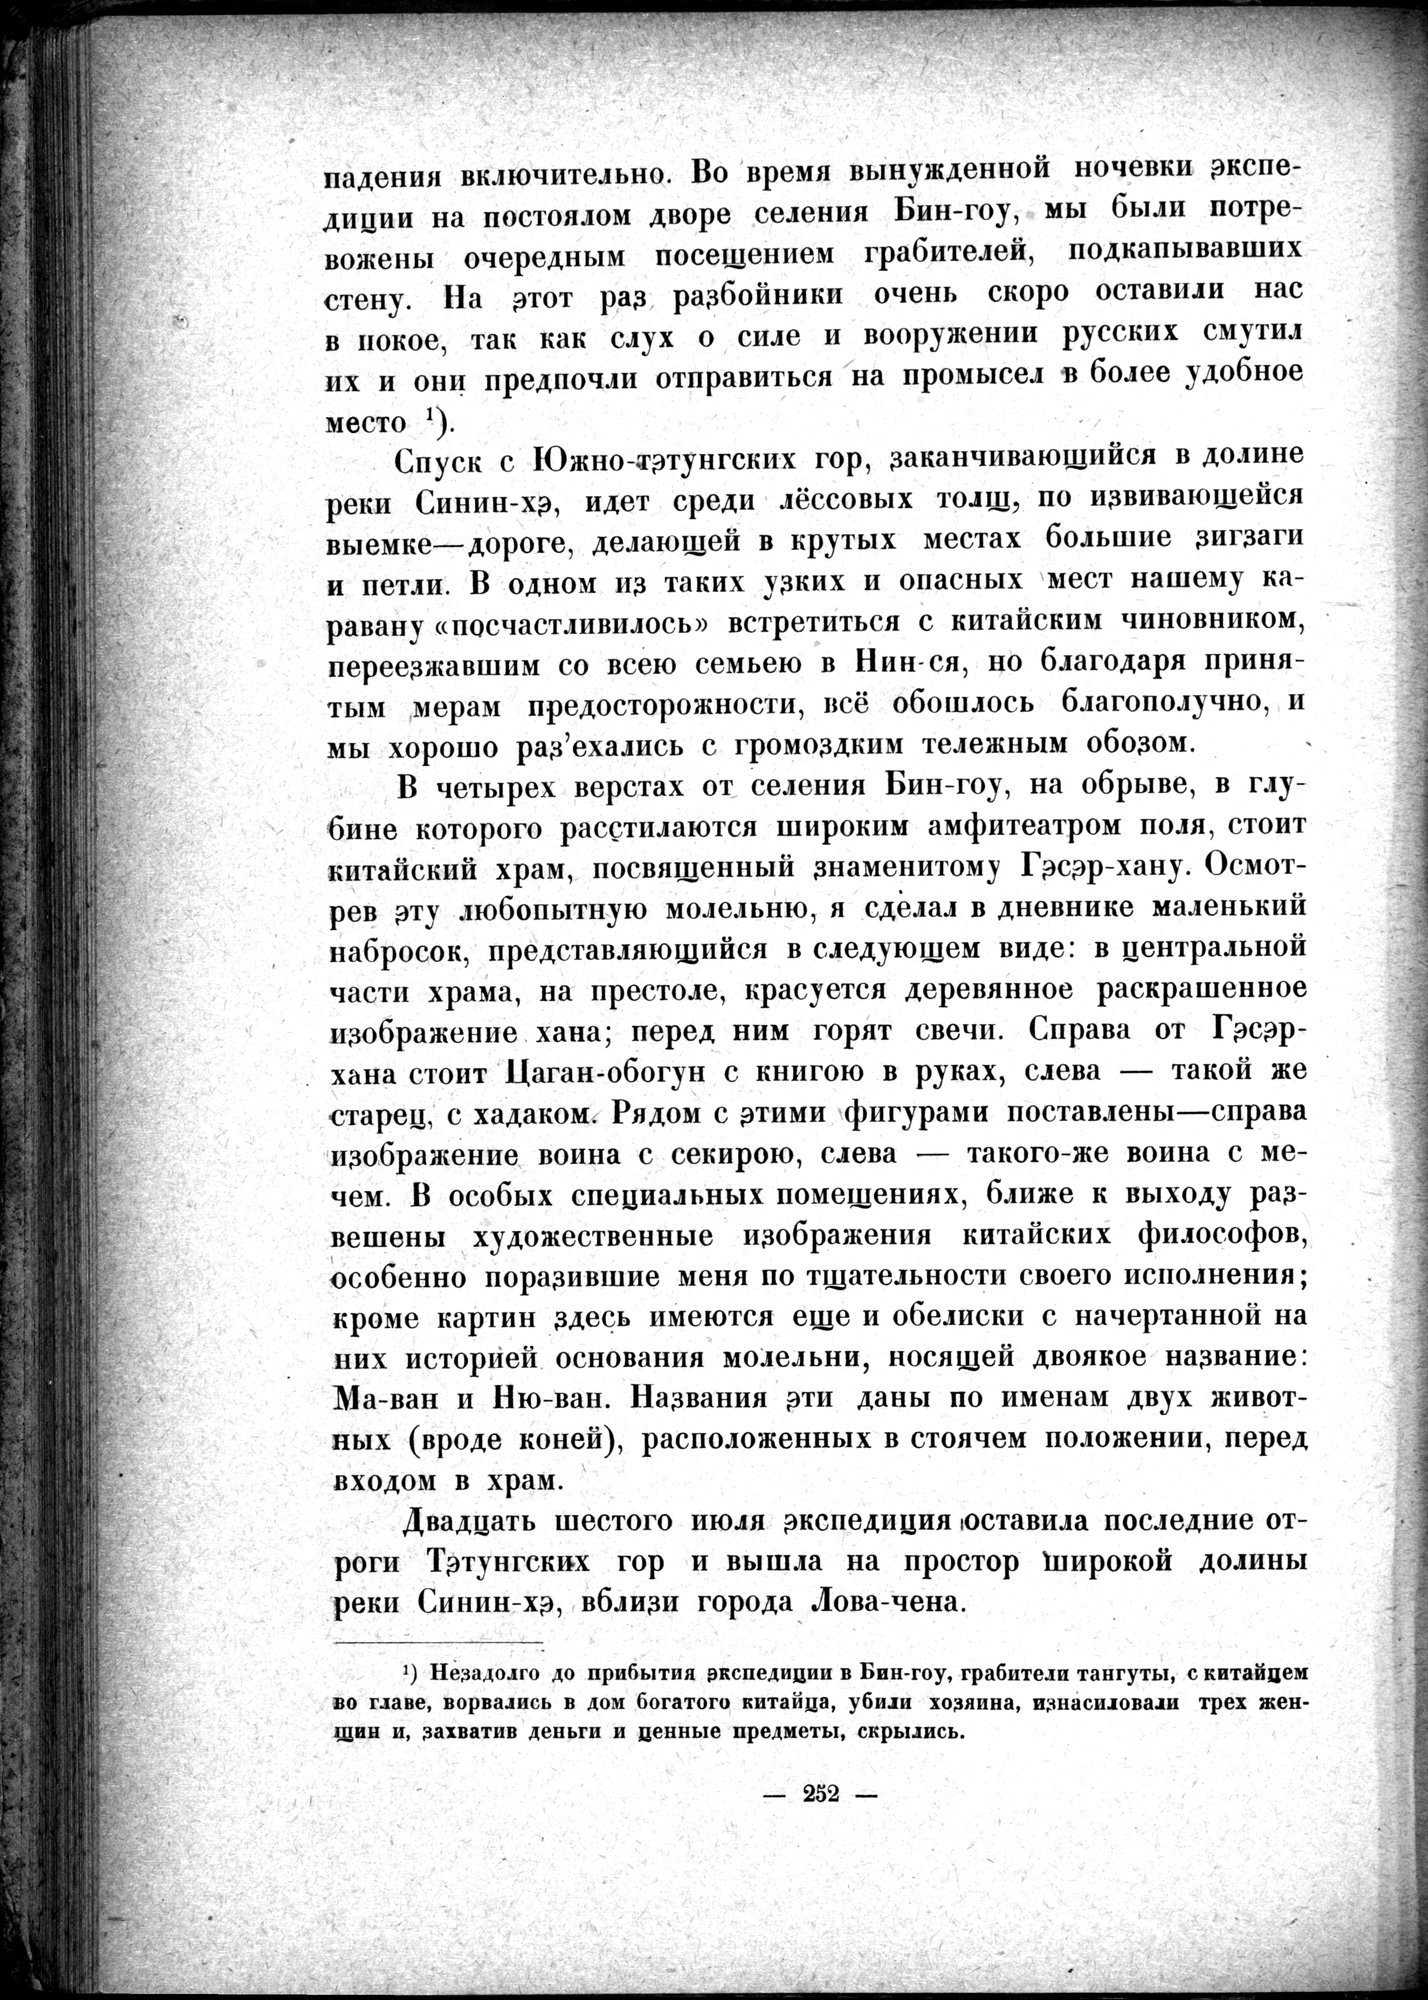 Mongoliya i Amdo i mertby gorod Khara-Khoto : vol.1 / Page 298 (Grayscale High Resolution Image)